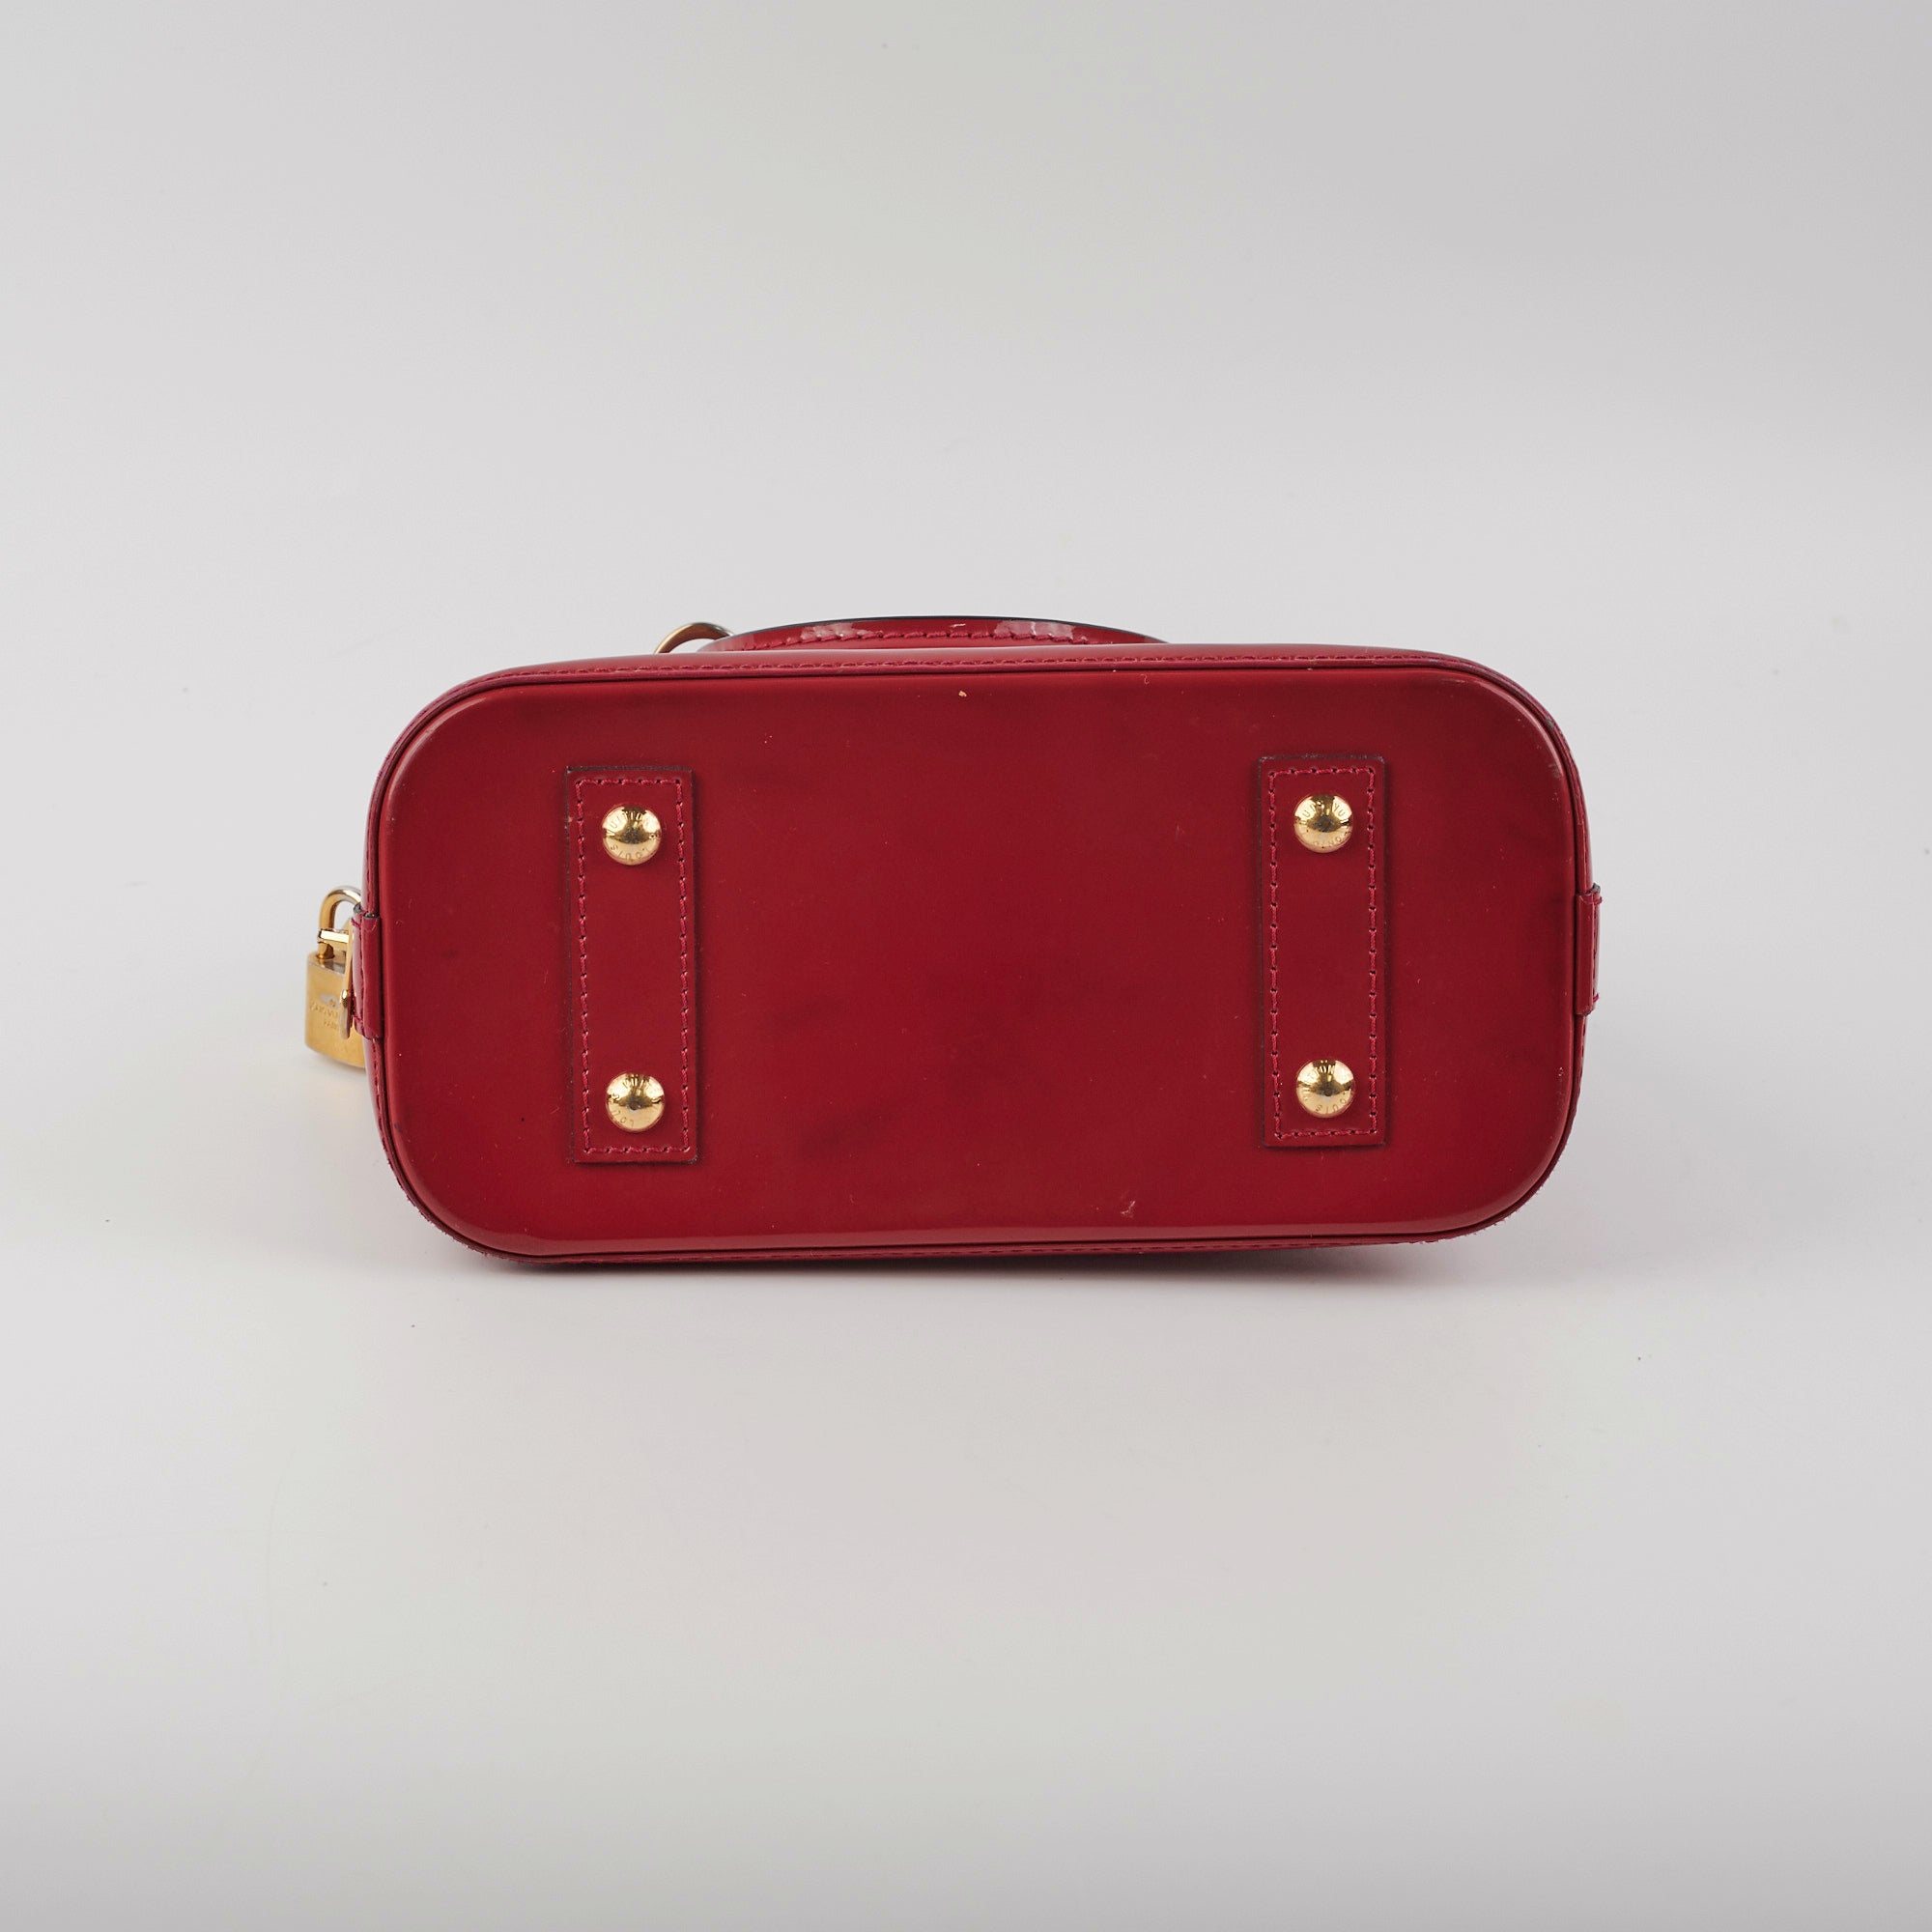 Louis Vuitton Alma BB Monogram Vernis Shoulder Handbag - THE PURSE AFFAIR